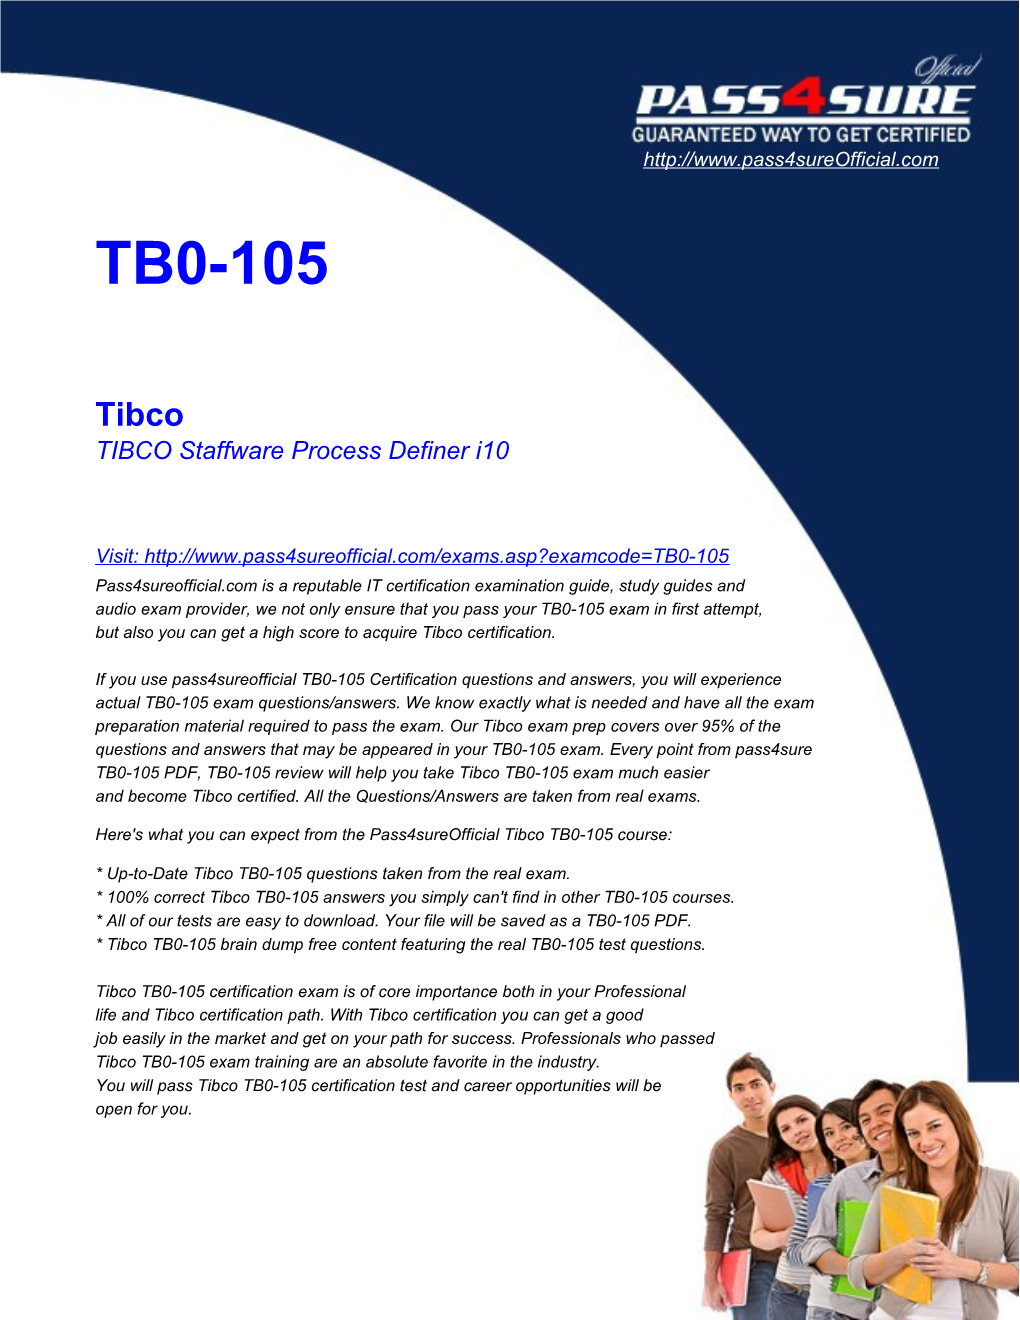 TIBCO Staffware Process Definer I10